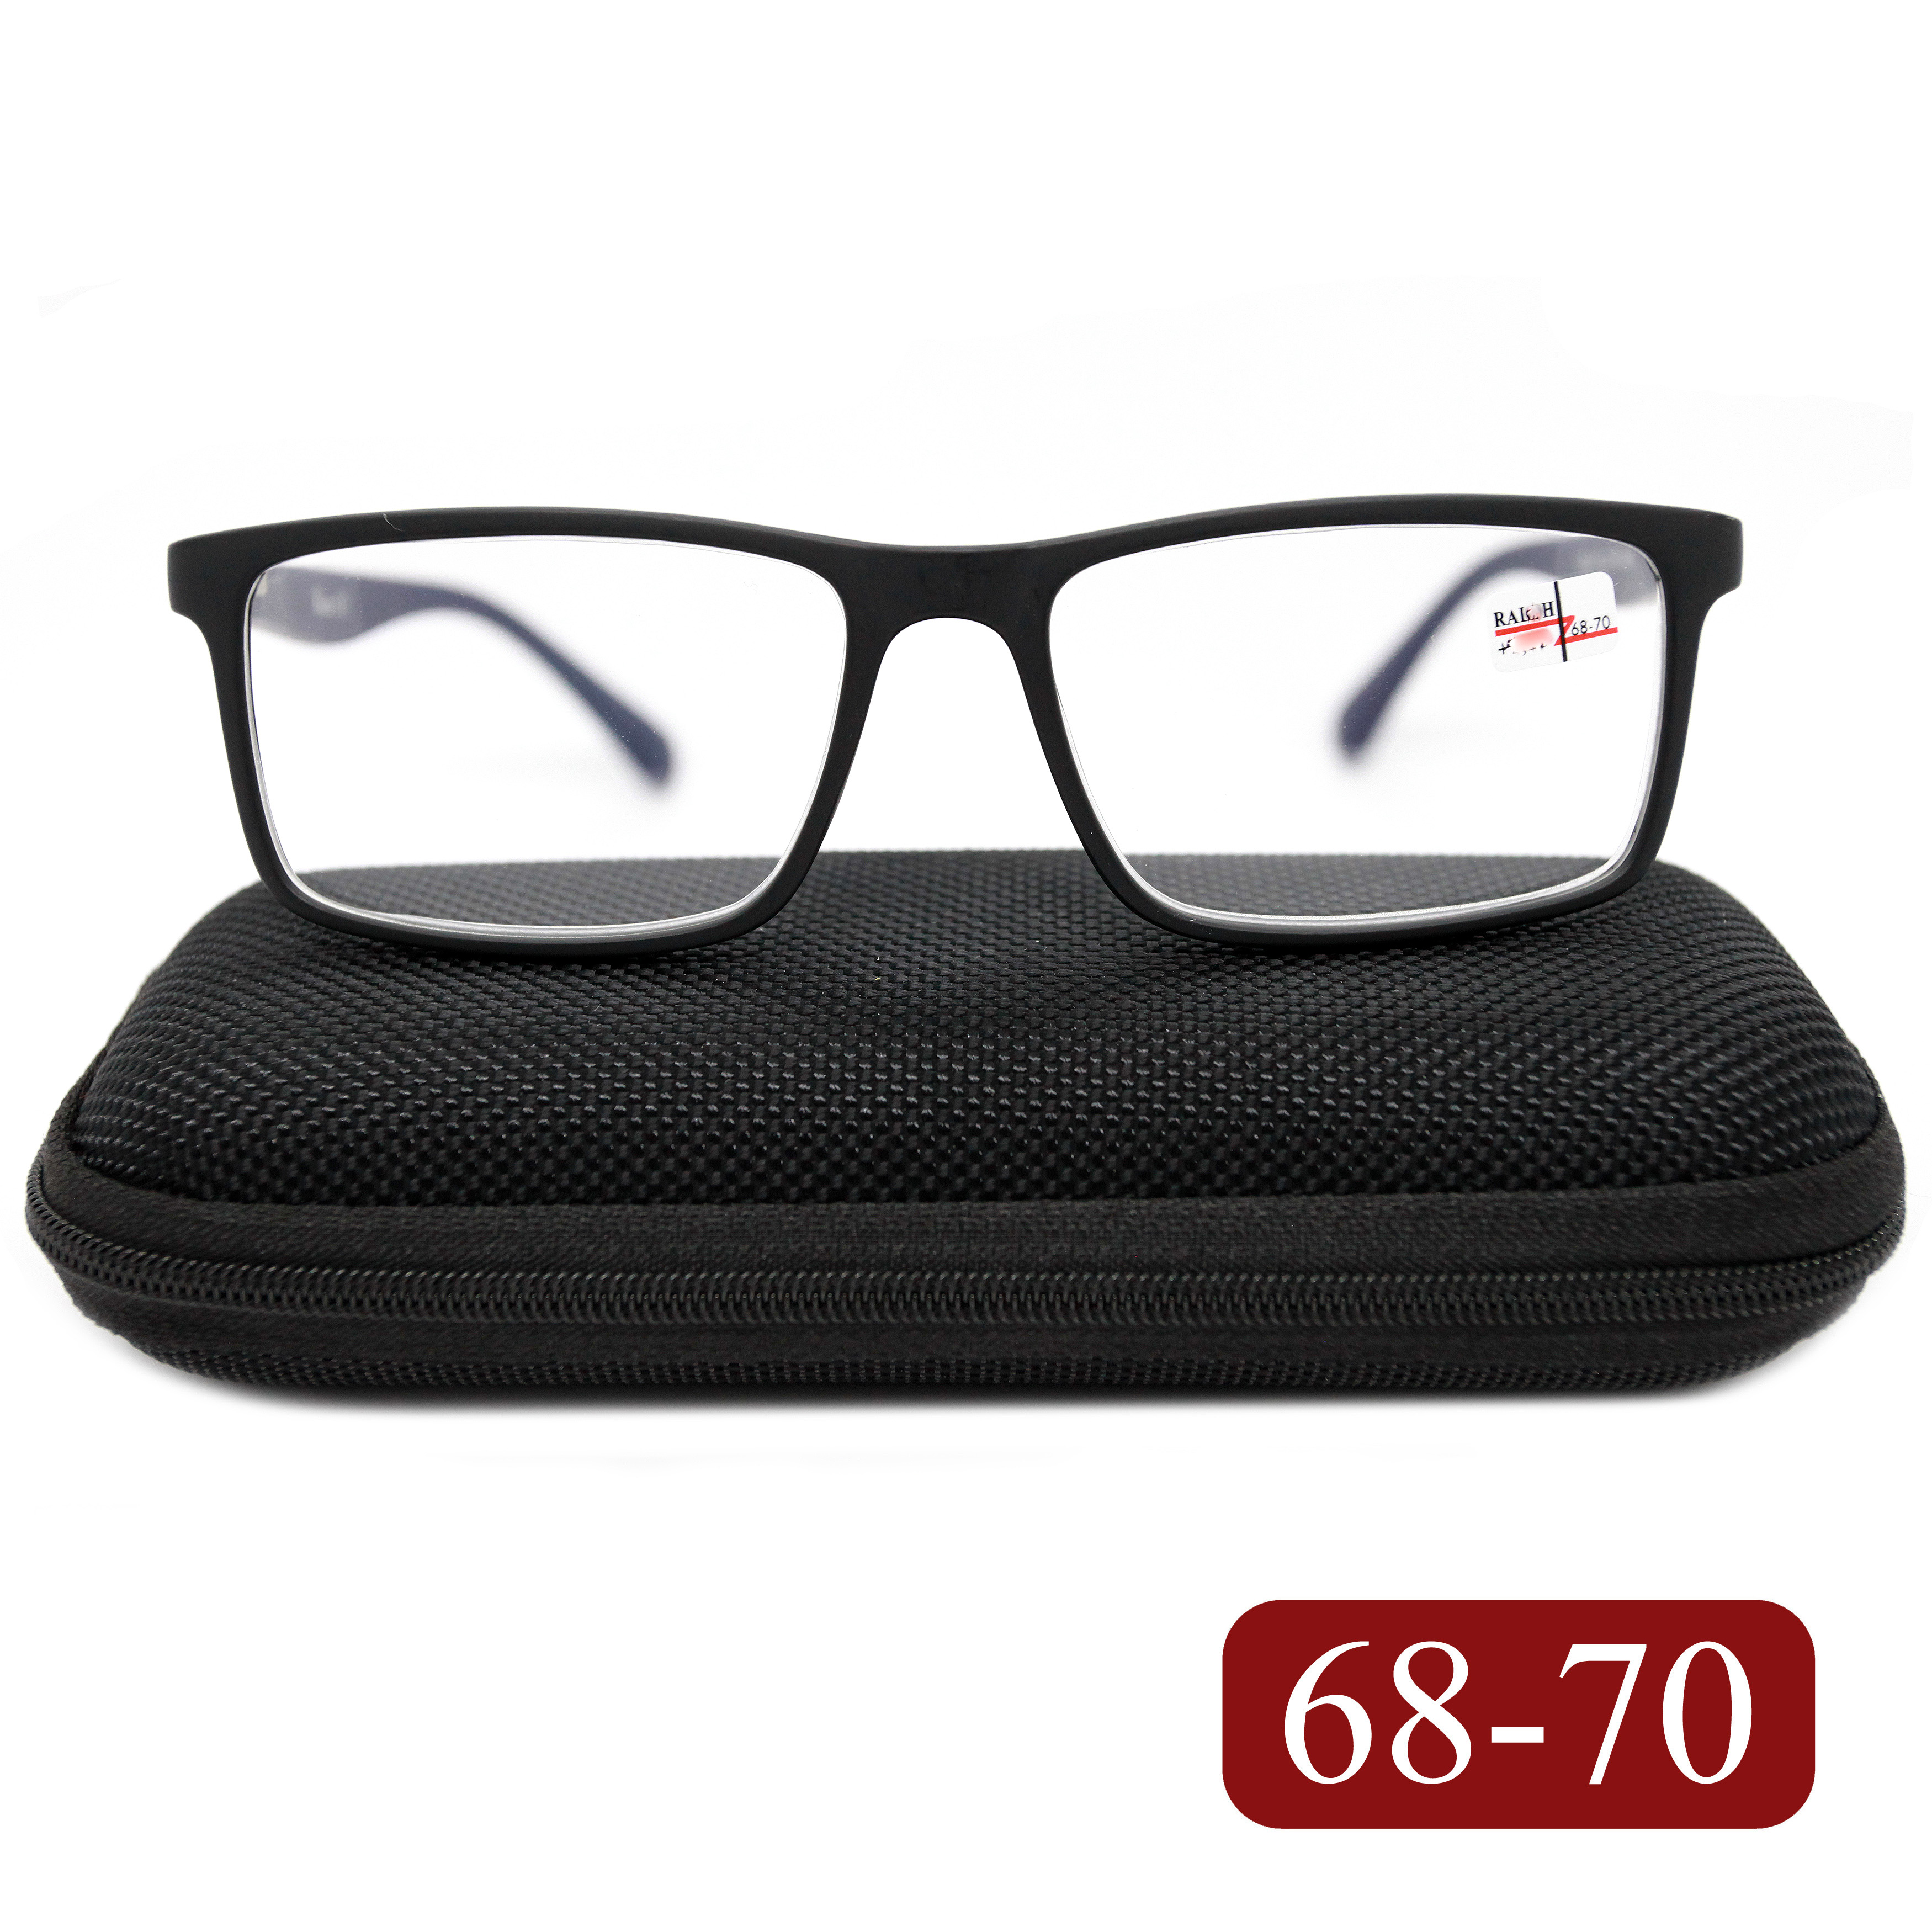 Готовые очки RALPH 0682 +5,00, c футляром, черно-синий, РЦ 68-70